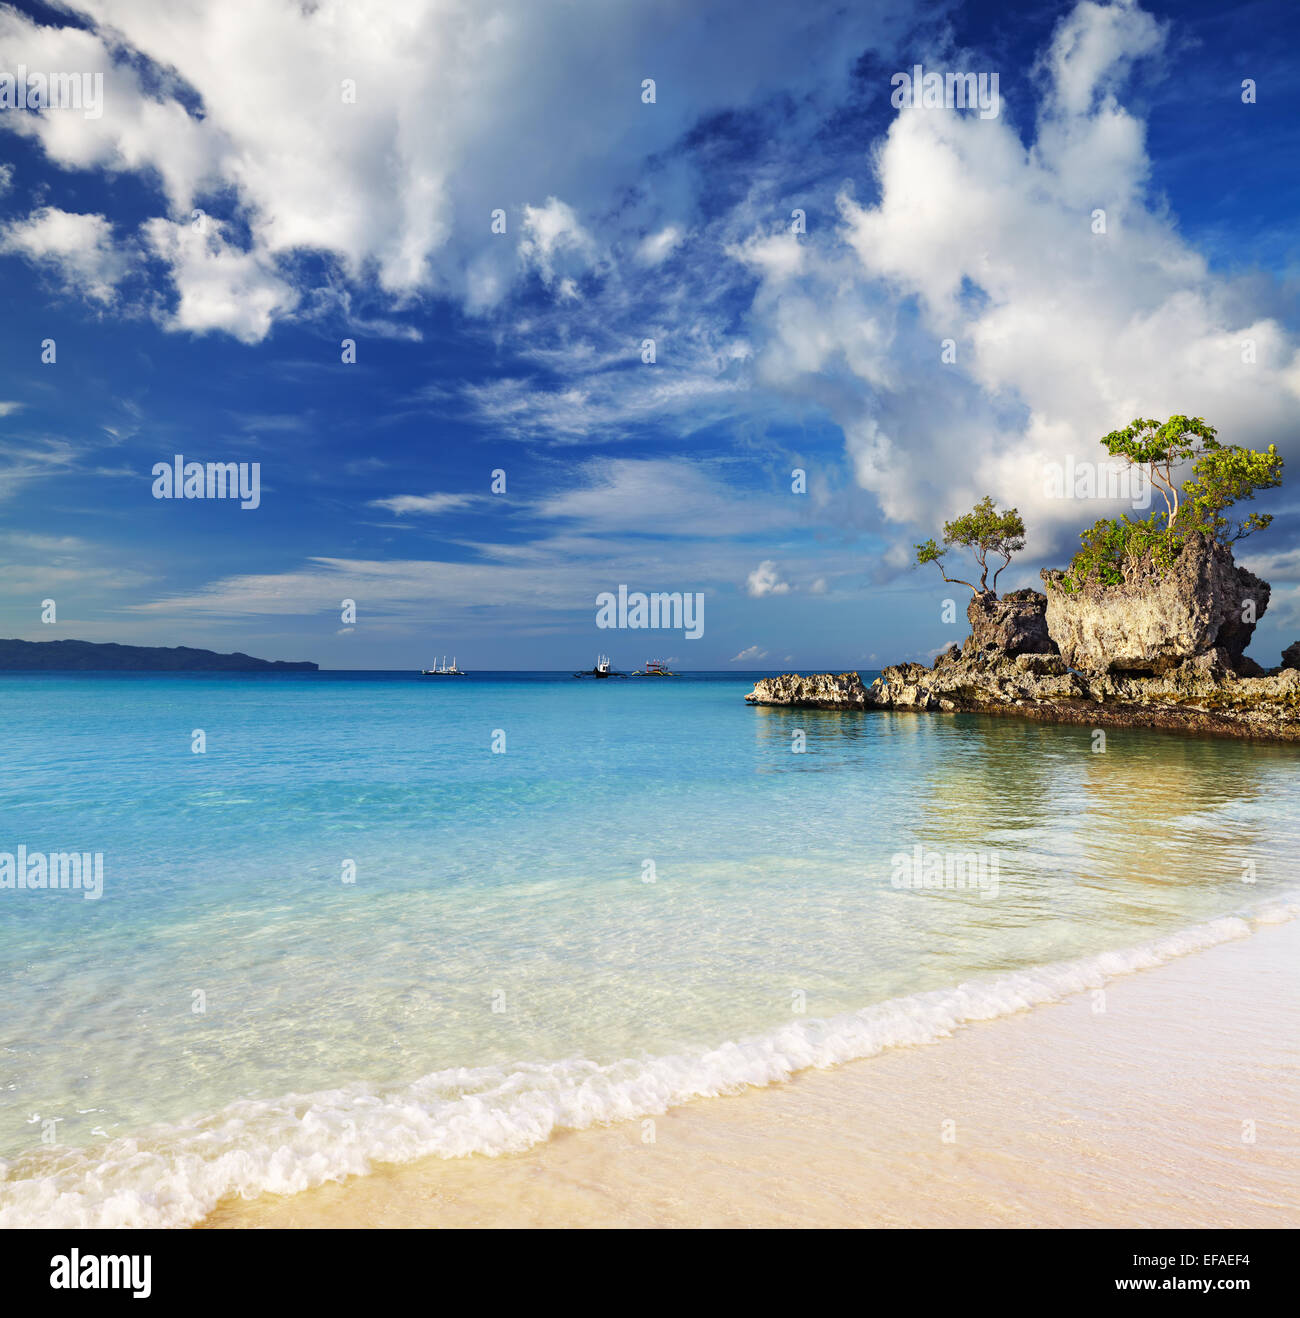 Tropical beach, Willy's rock, Boracay island, Philippines Stock Photo